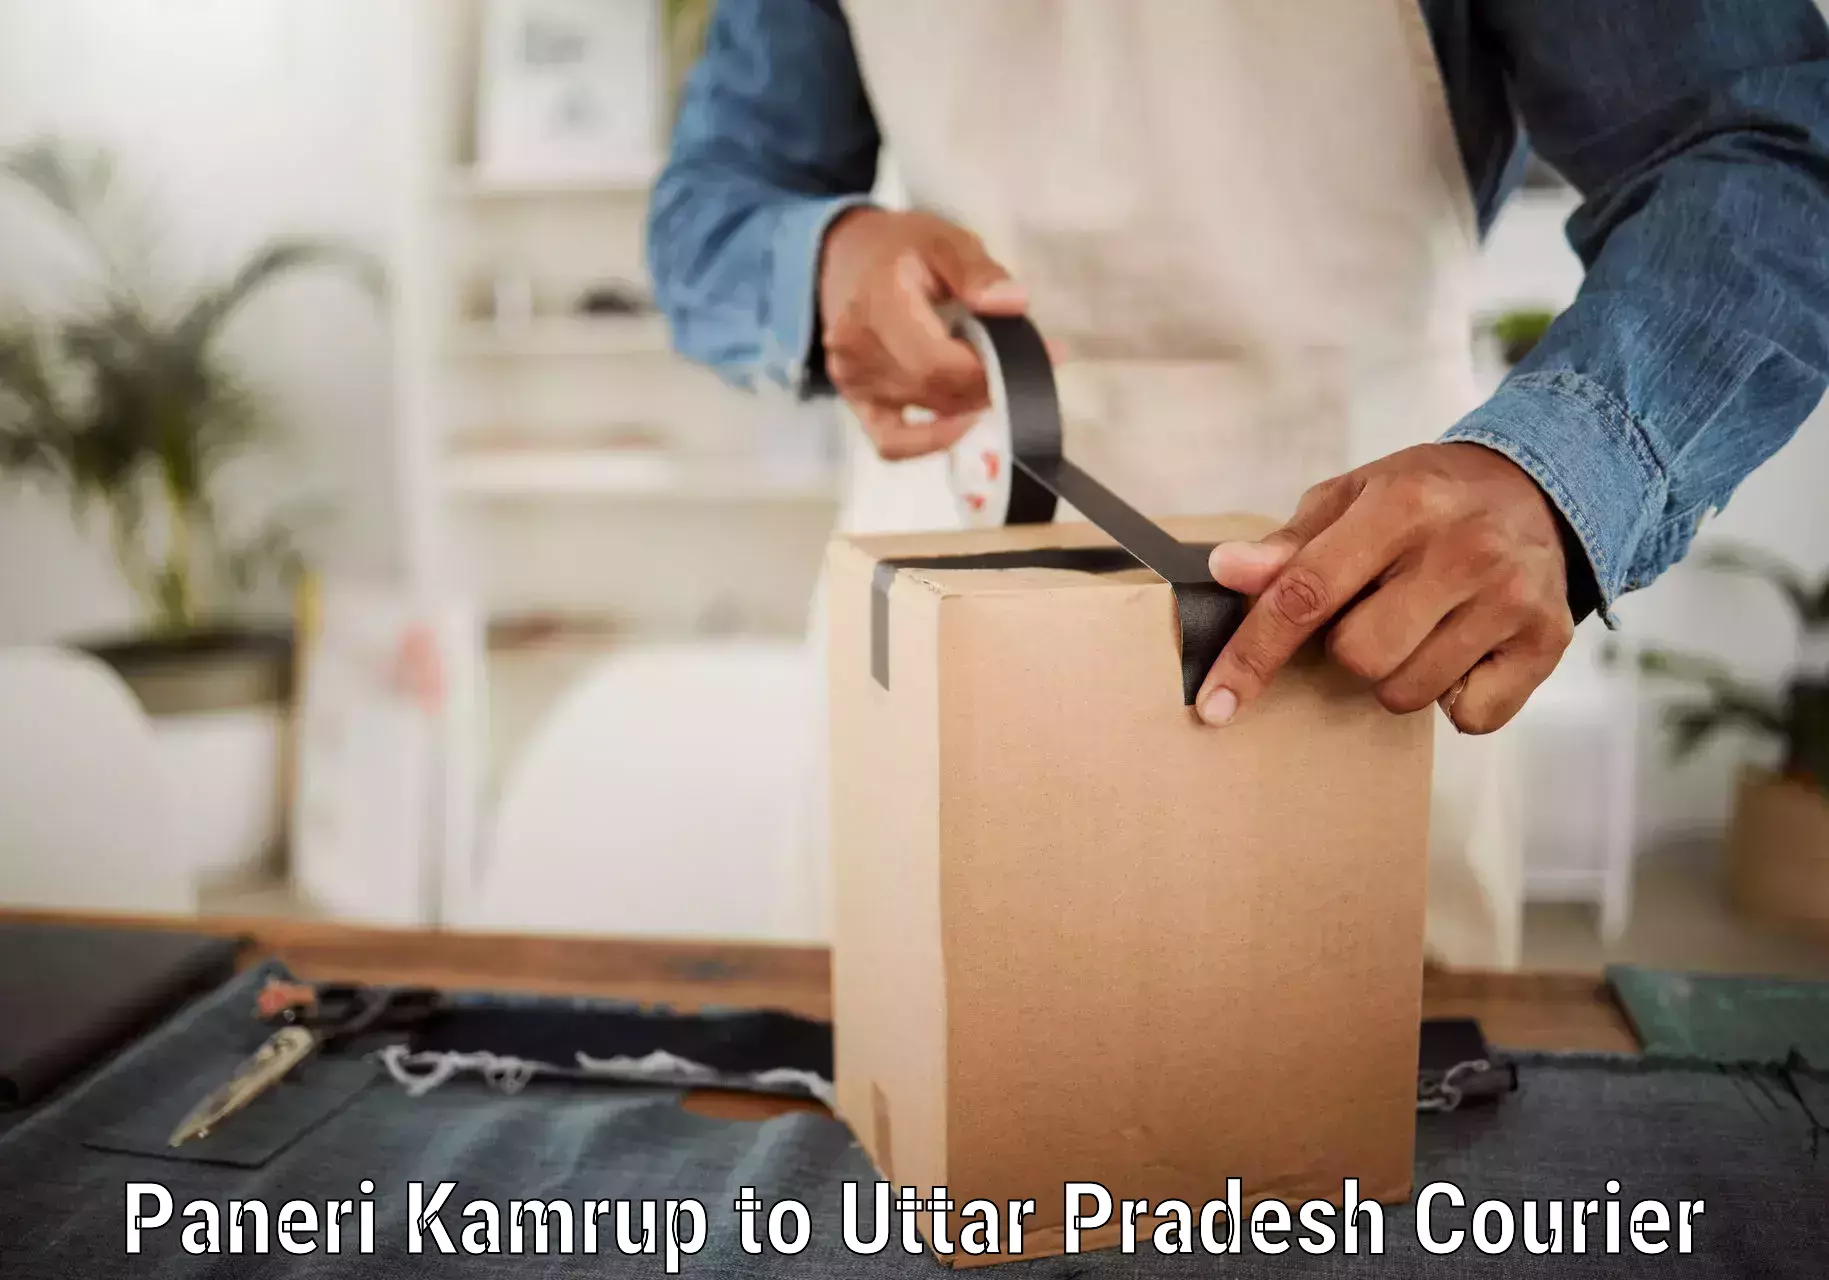 Bulk courier orders Paneri Kamrup to Itava